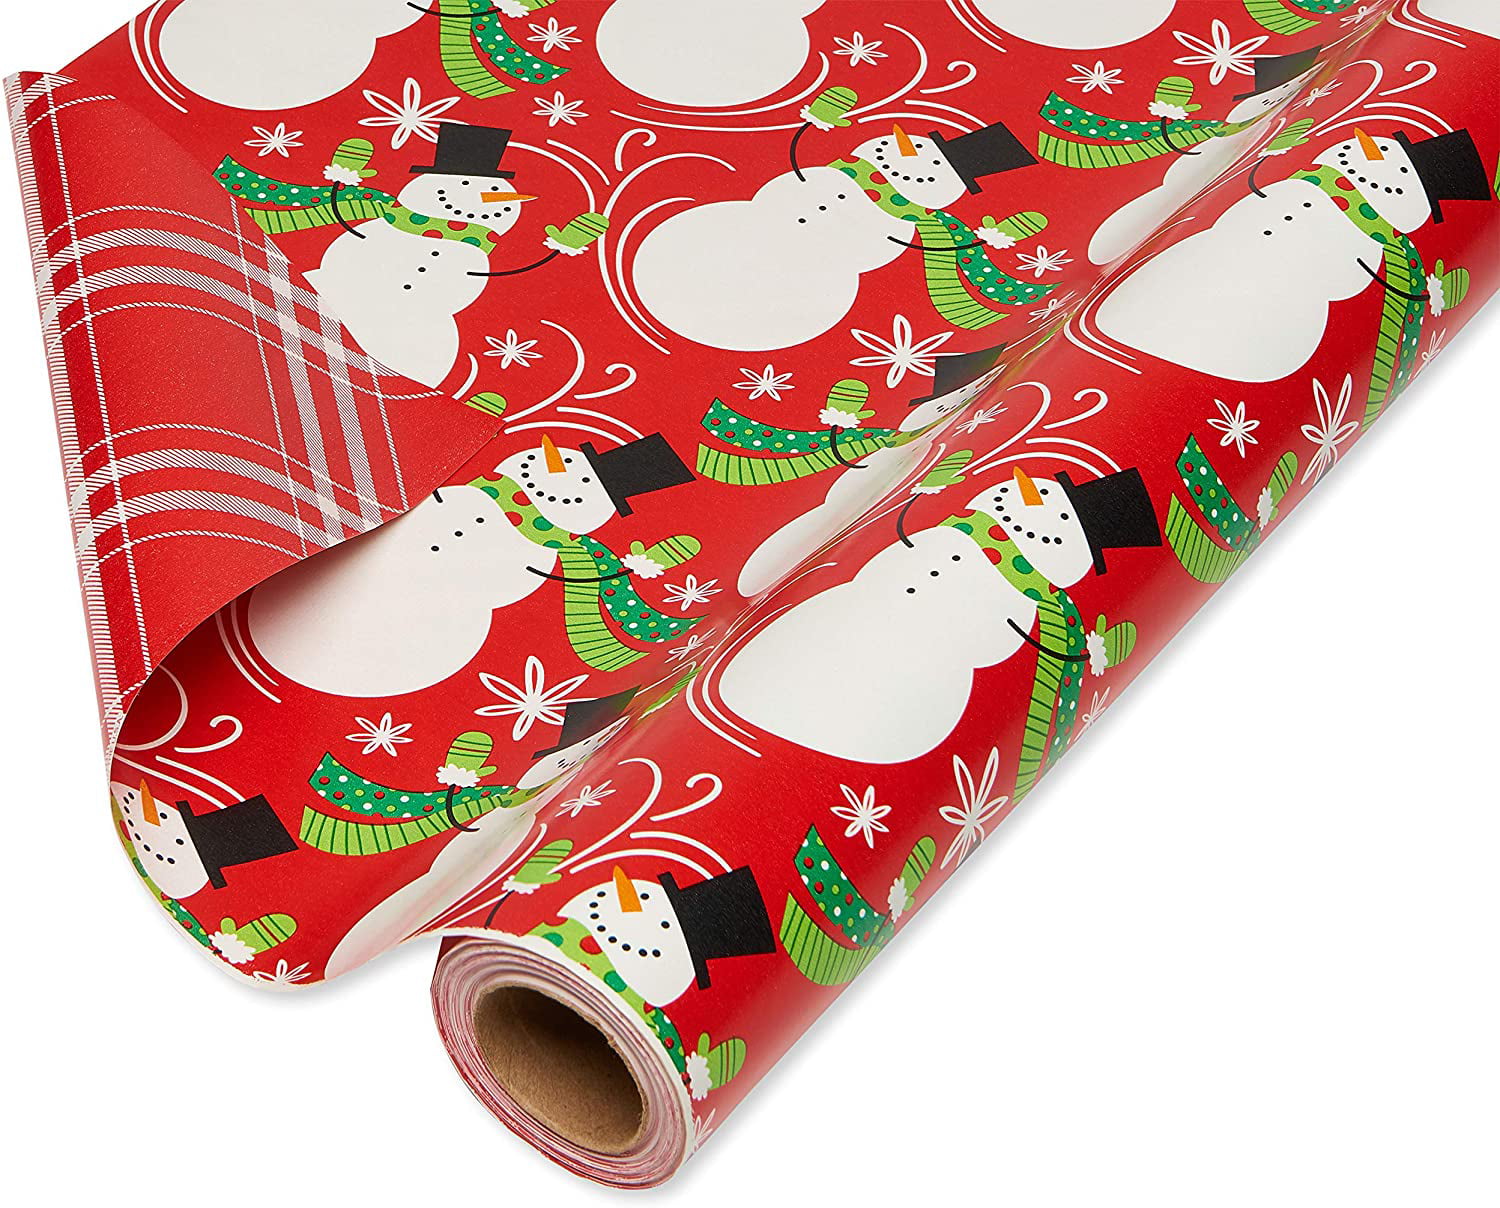 Penguin Reinde Kids Snowman 4 x 10m Christmas Wrapping Paper Rolls Santa 